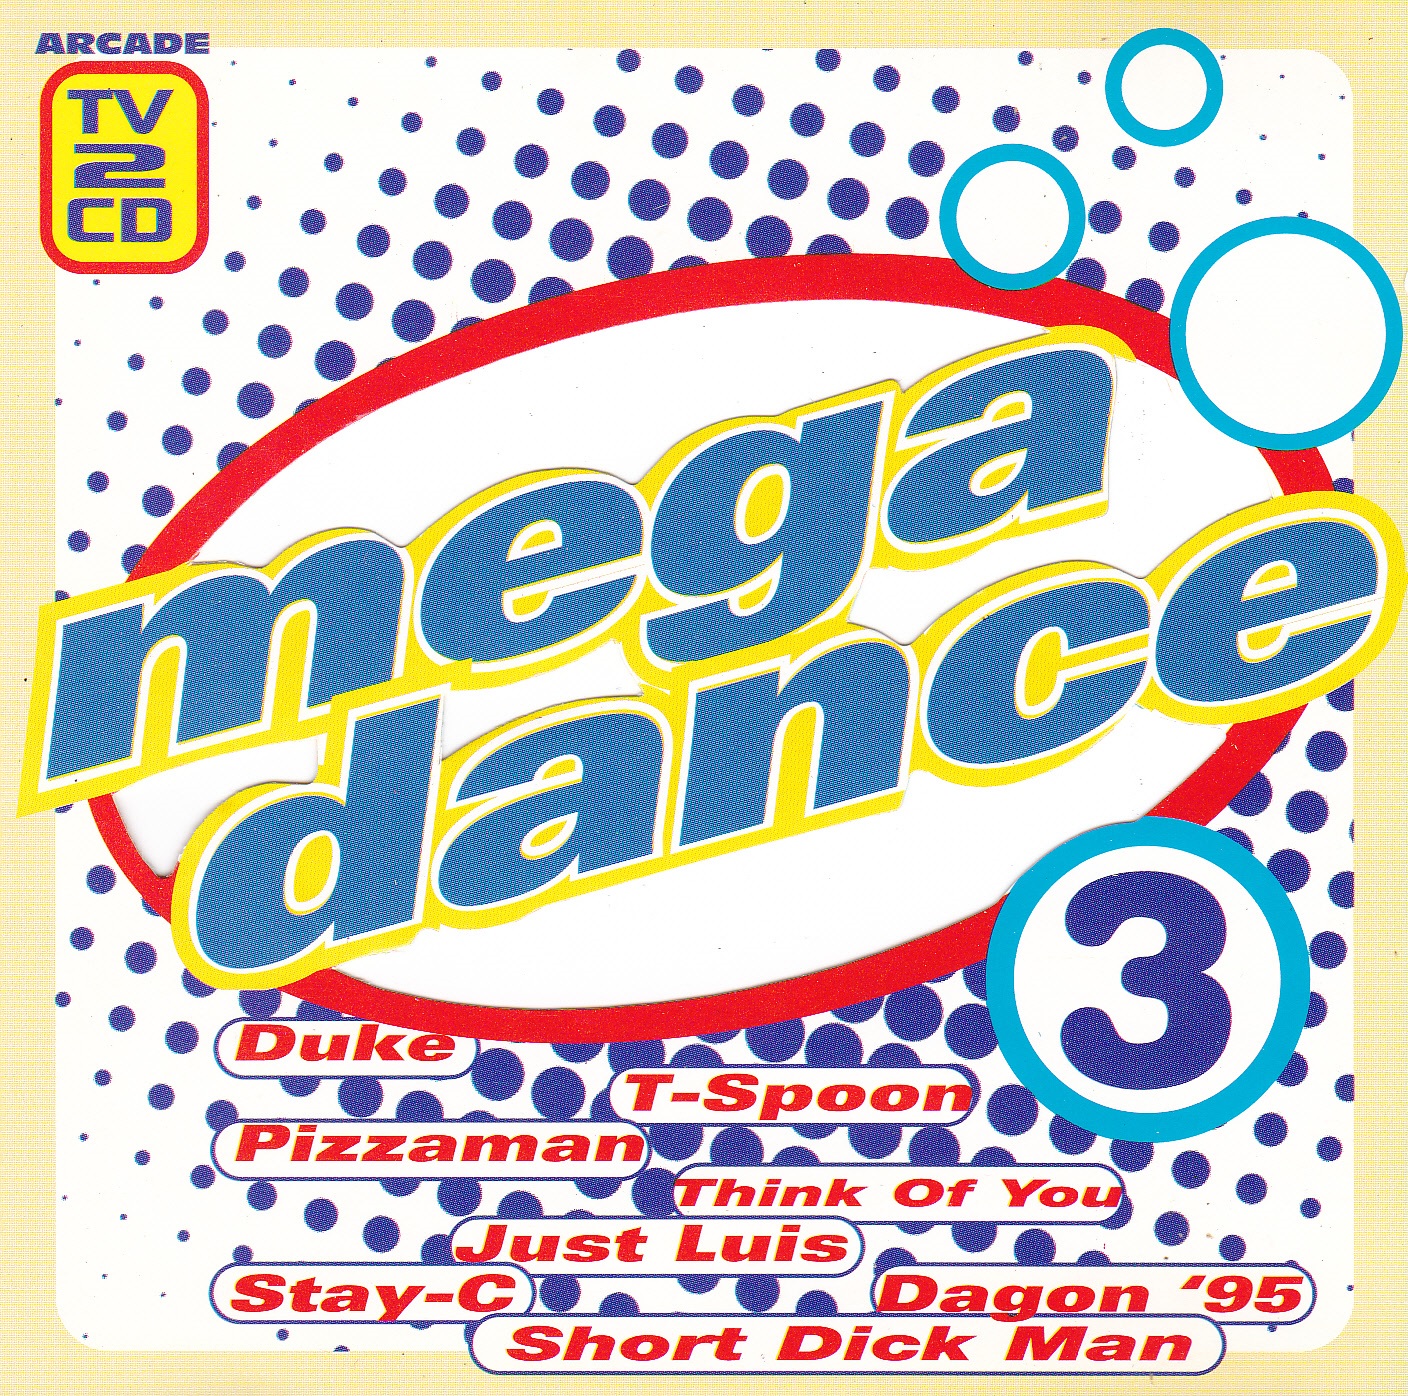 Mega Dance 3 - 2 CD's - 1995 - Arcade - ellodance